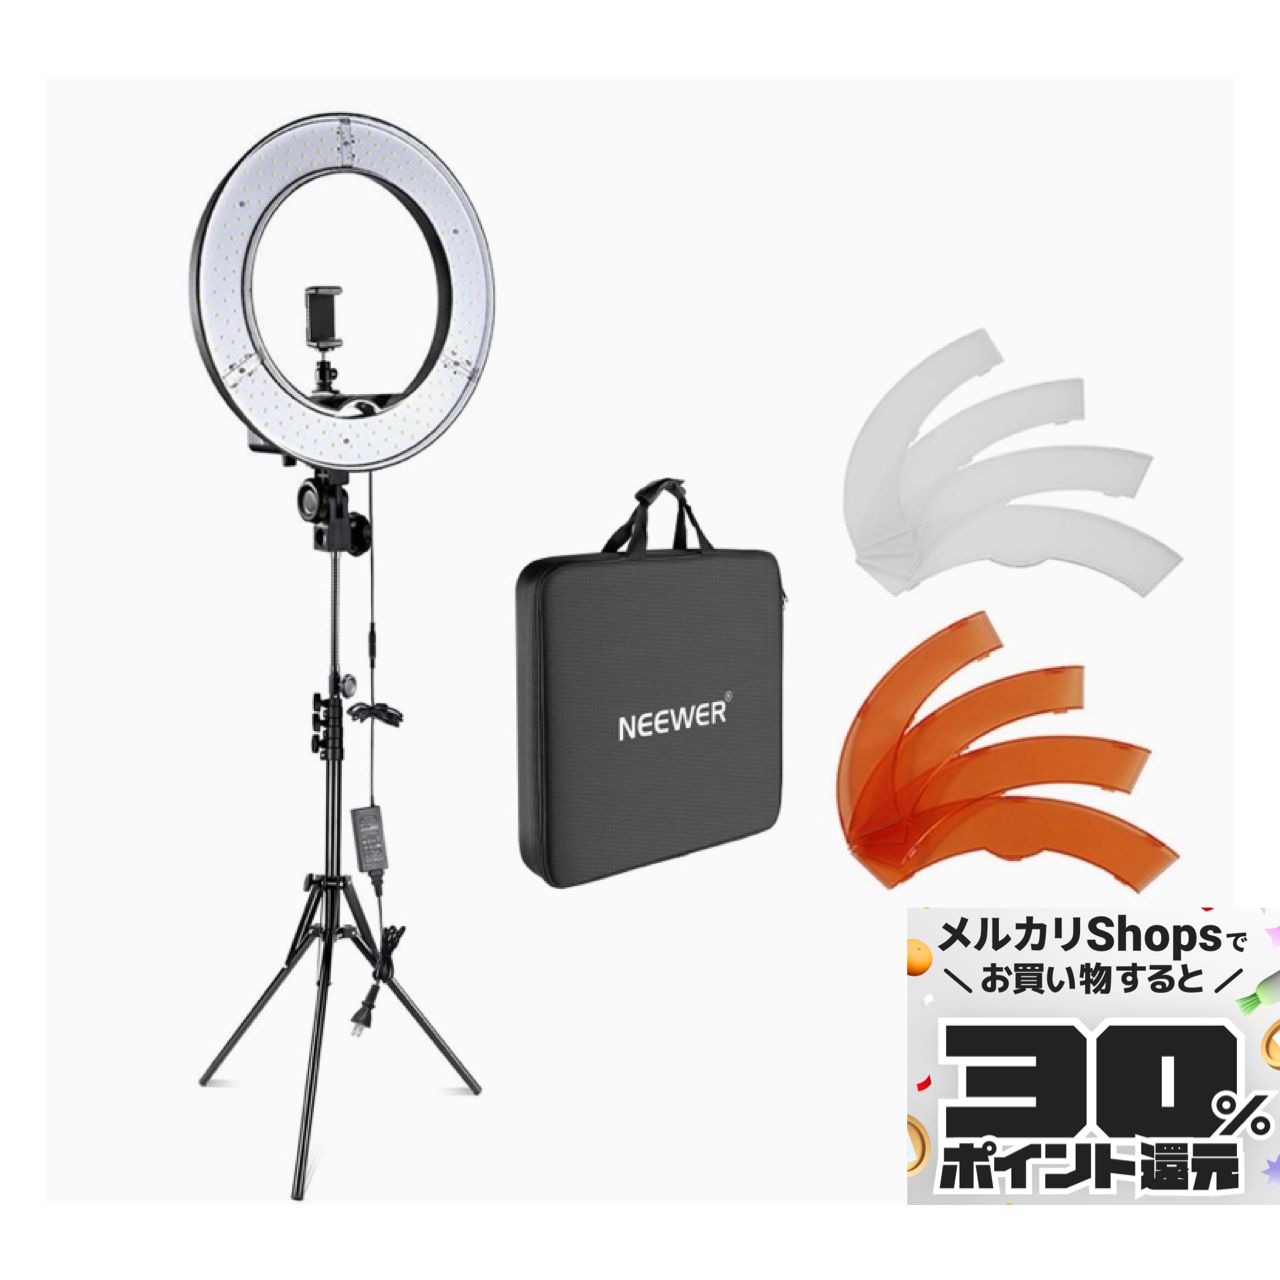 Neewer 18インチLEDリングライト カメラ写真ビデオ用照明セット - メルカリ